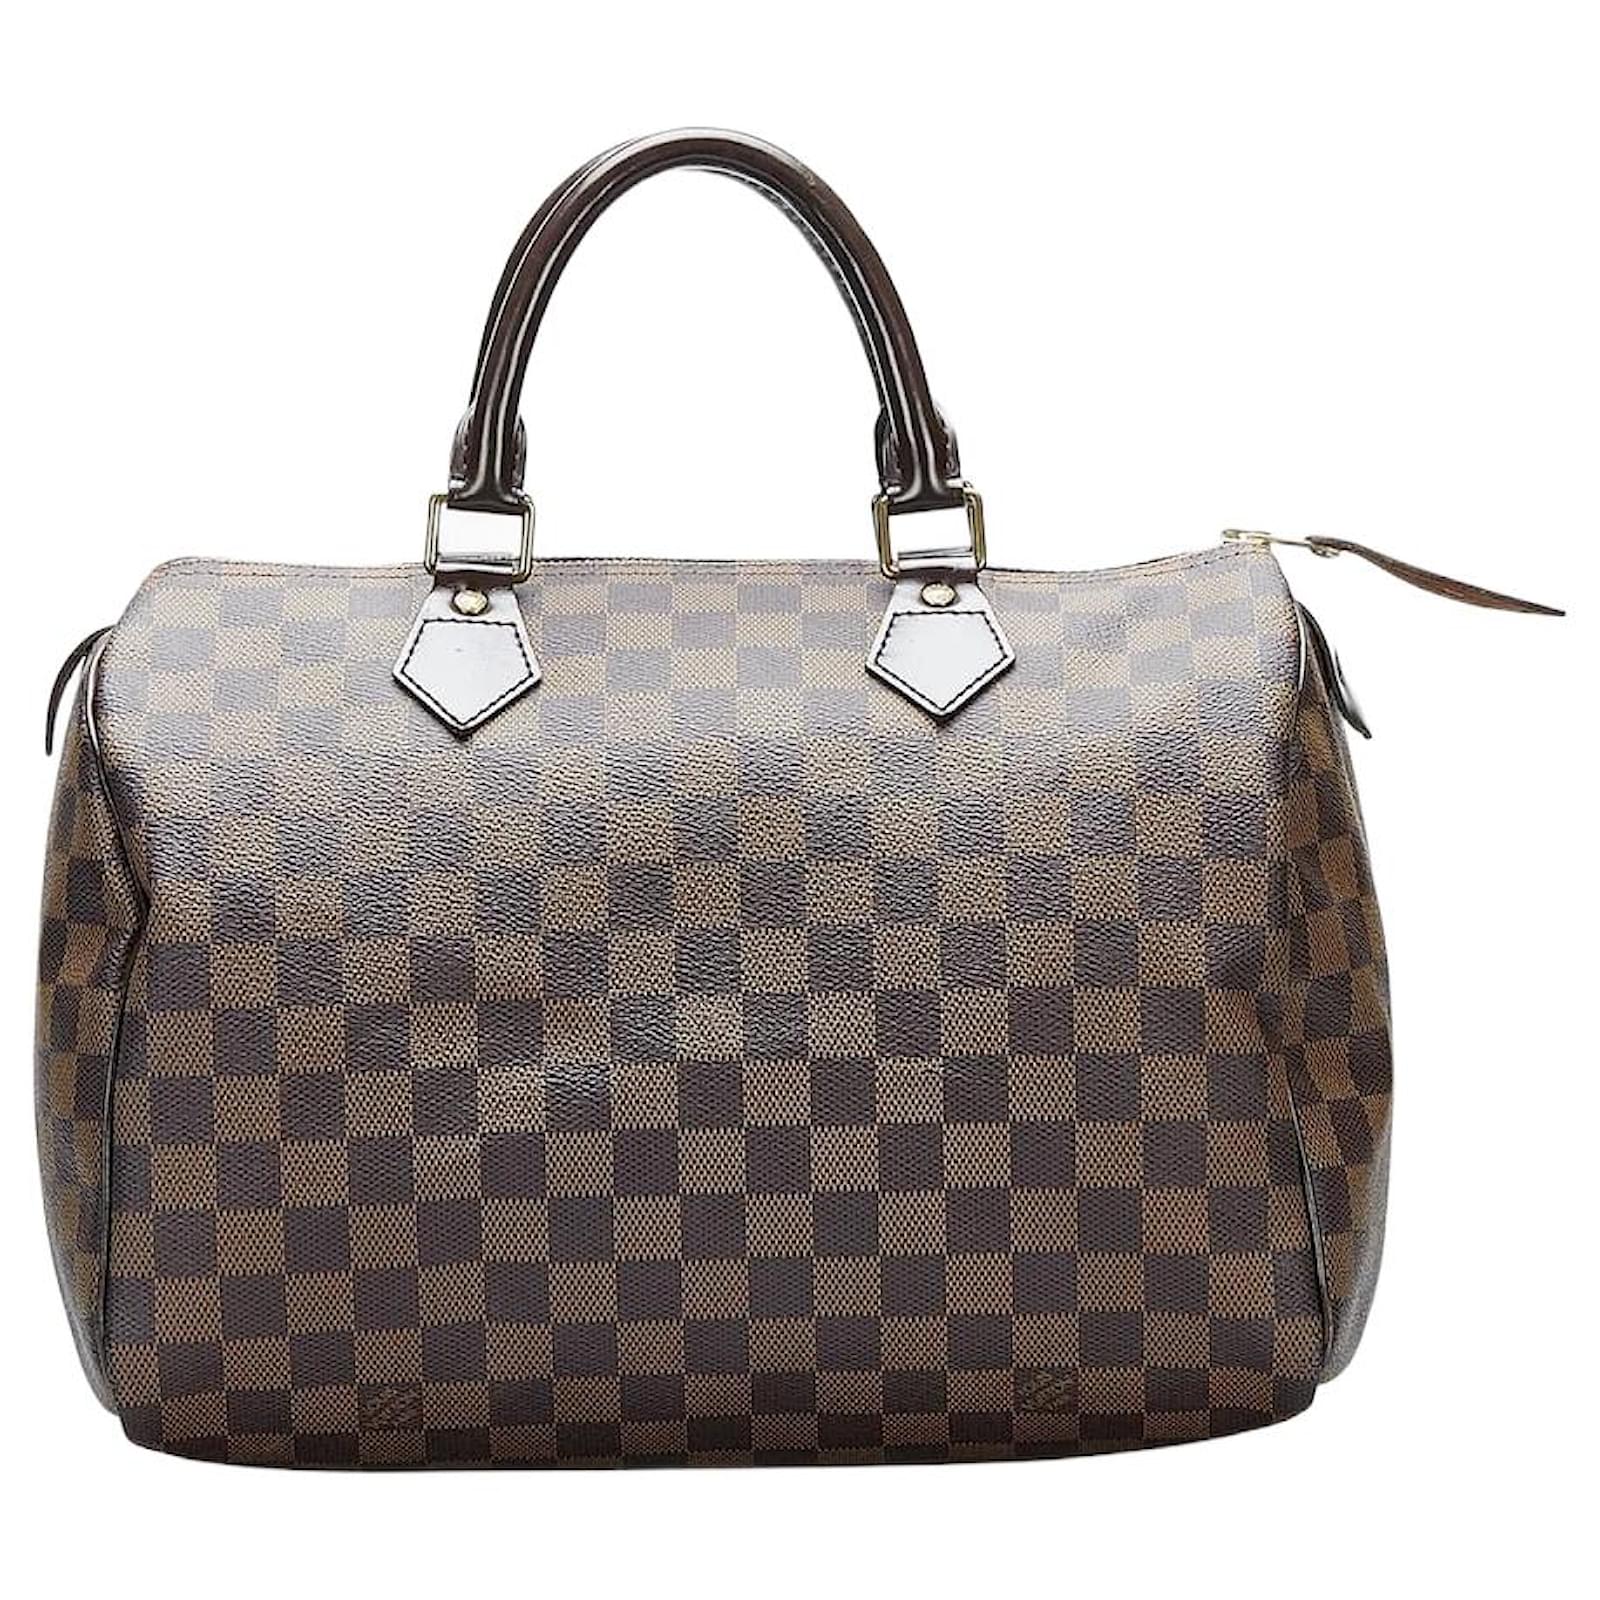 Louis Vuitton, Speedy 30 Damier Ebene cloth handbag. - Unique